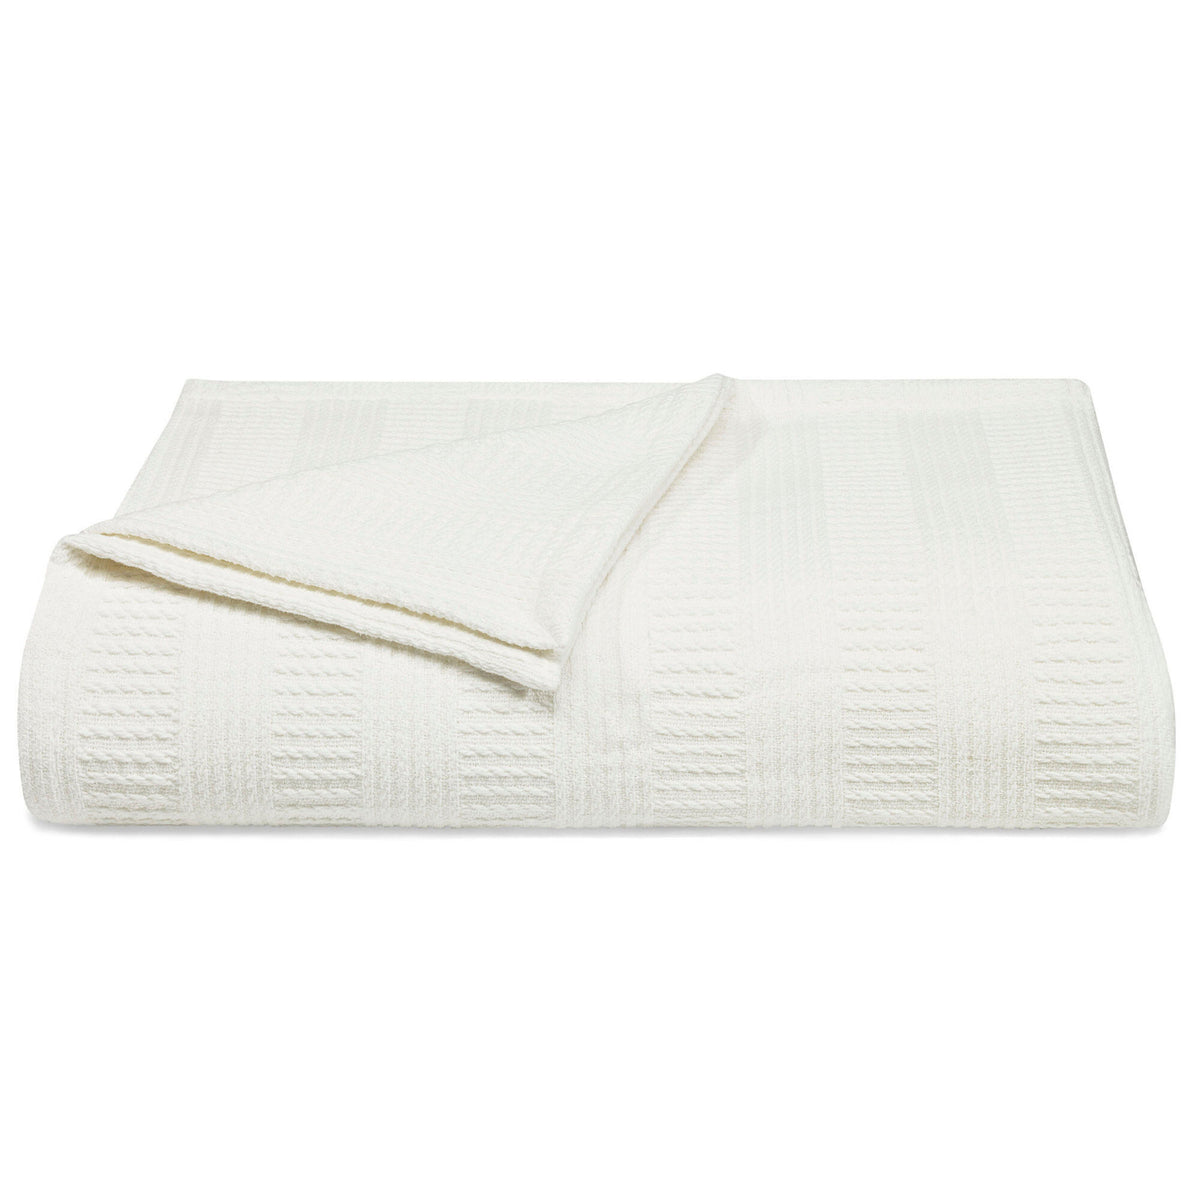 Nautica Rope Stripe Blanket - Deck White Bright White